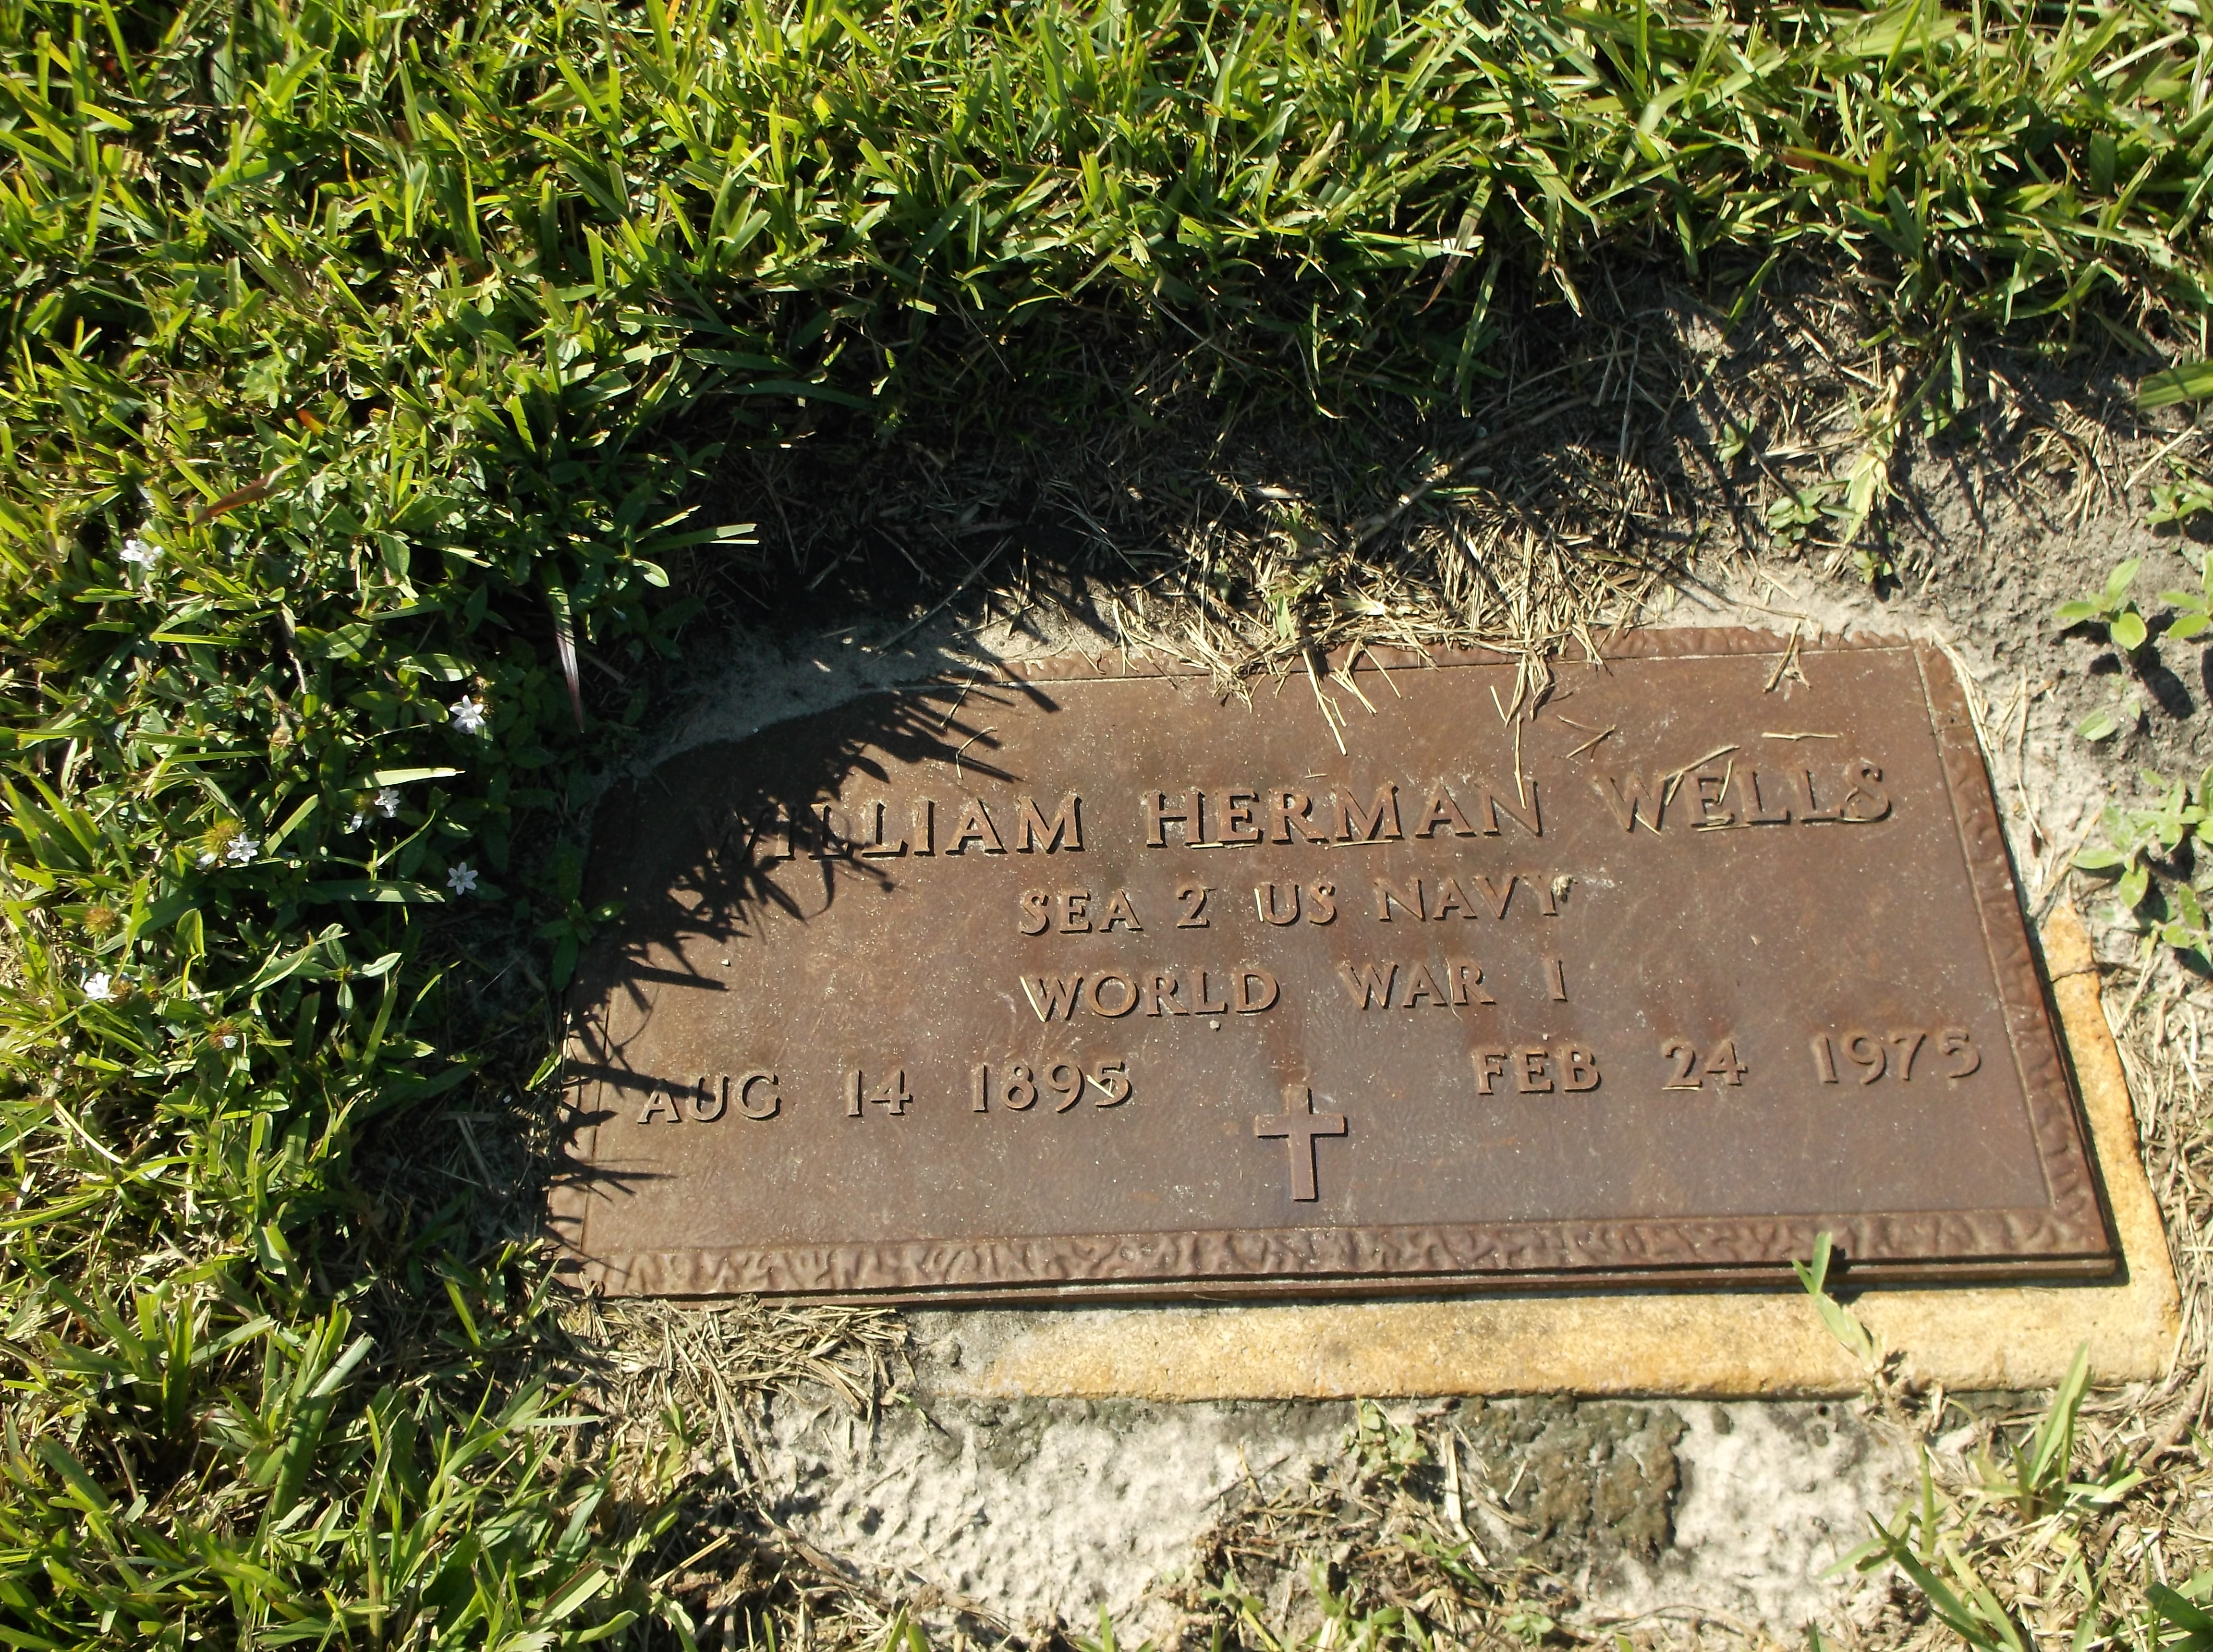 William Herman Wells